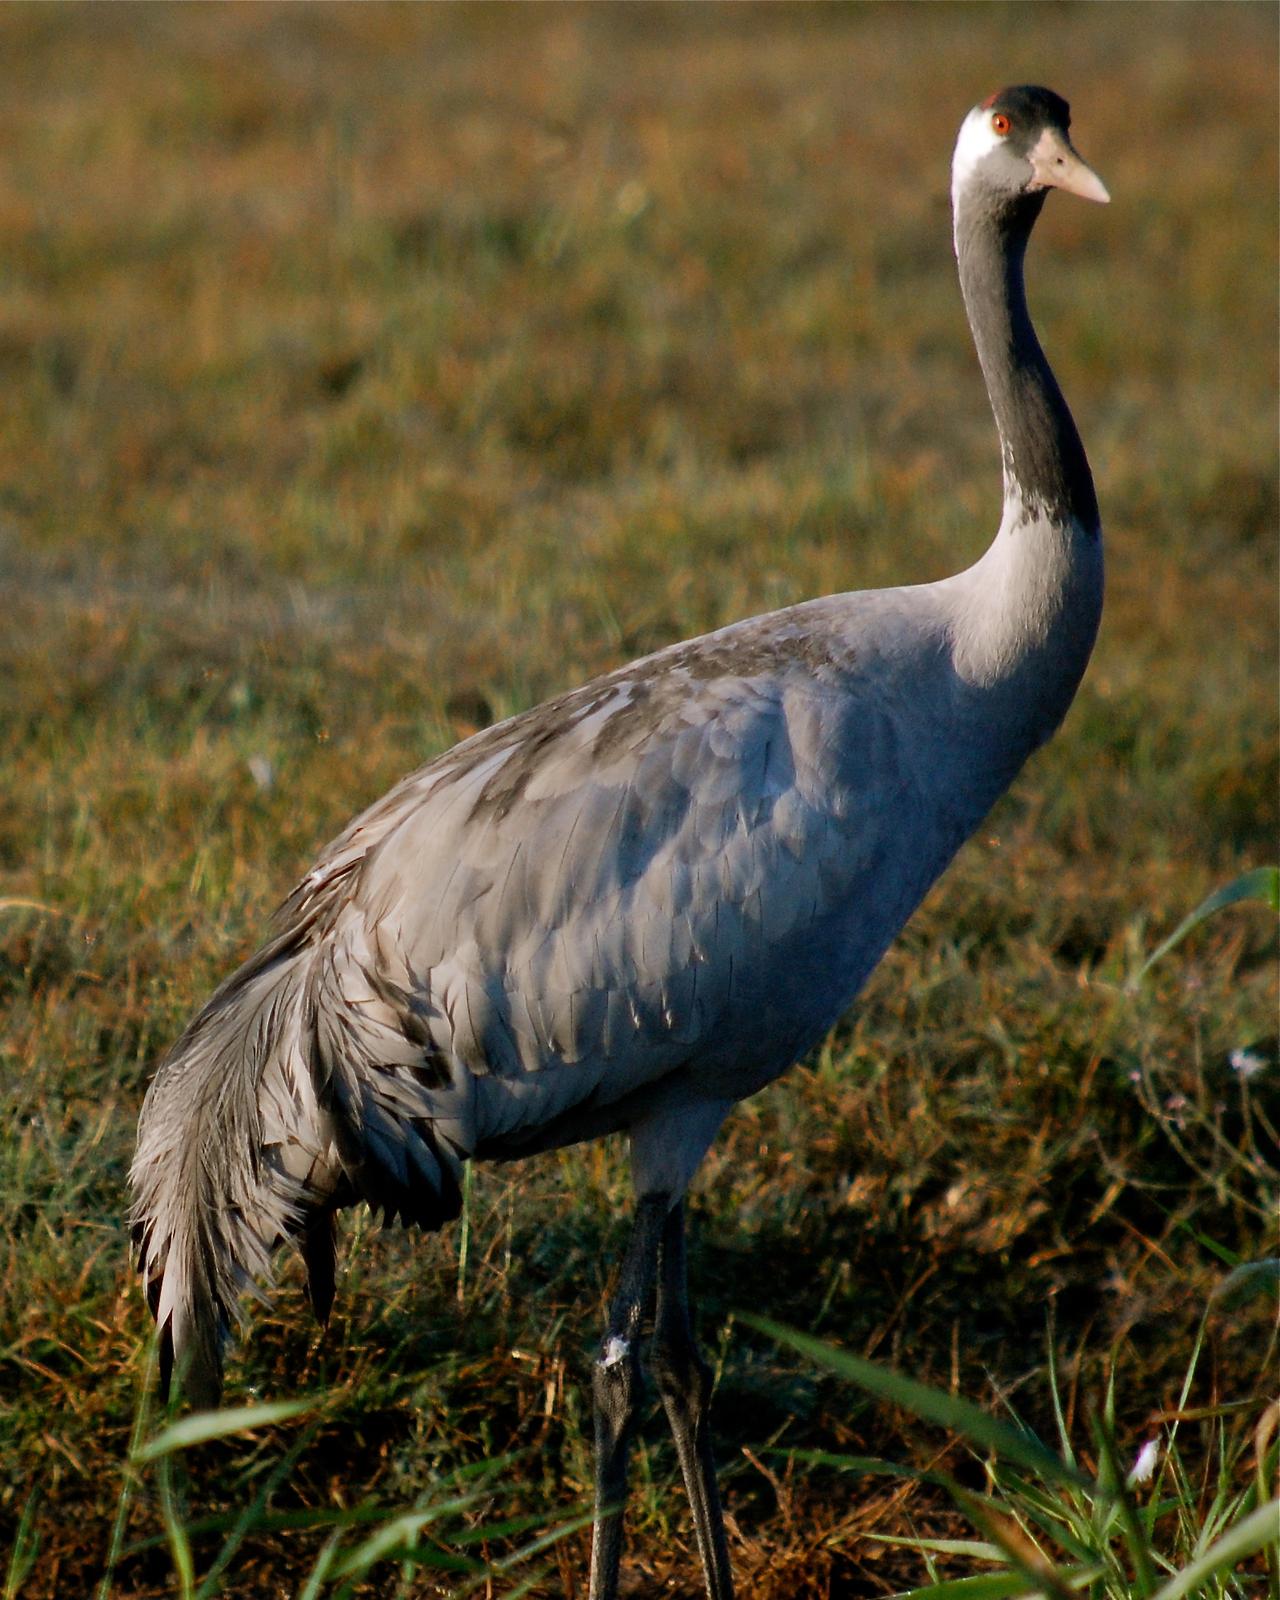 Common Crane Photo by Birdchick.com